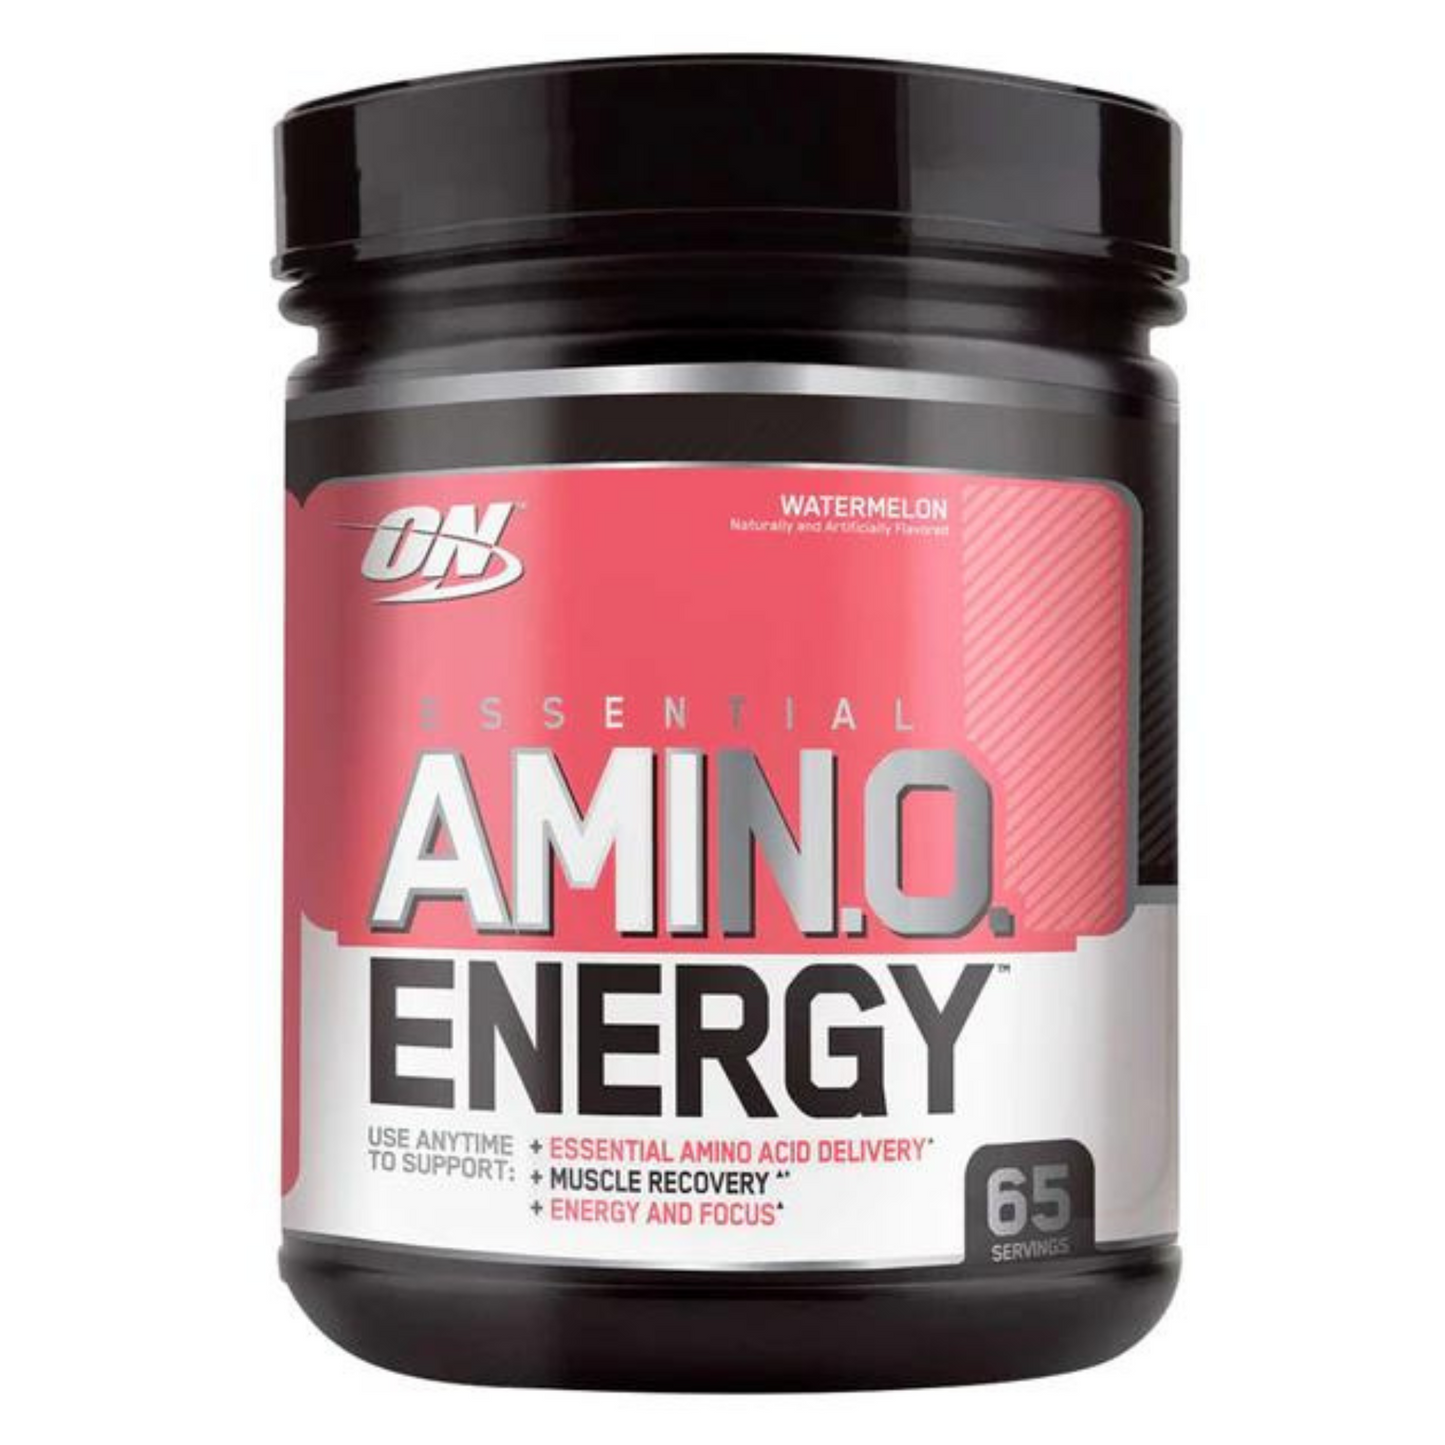 Amino Energy Watermelon | 65 Servings Optimum Nutrition